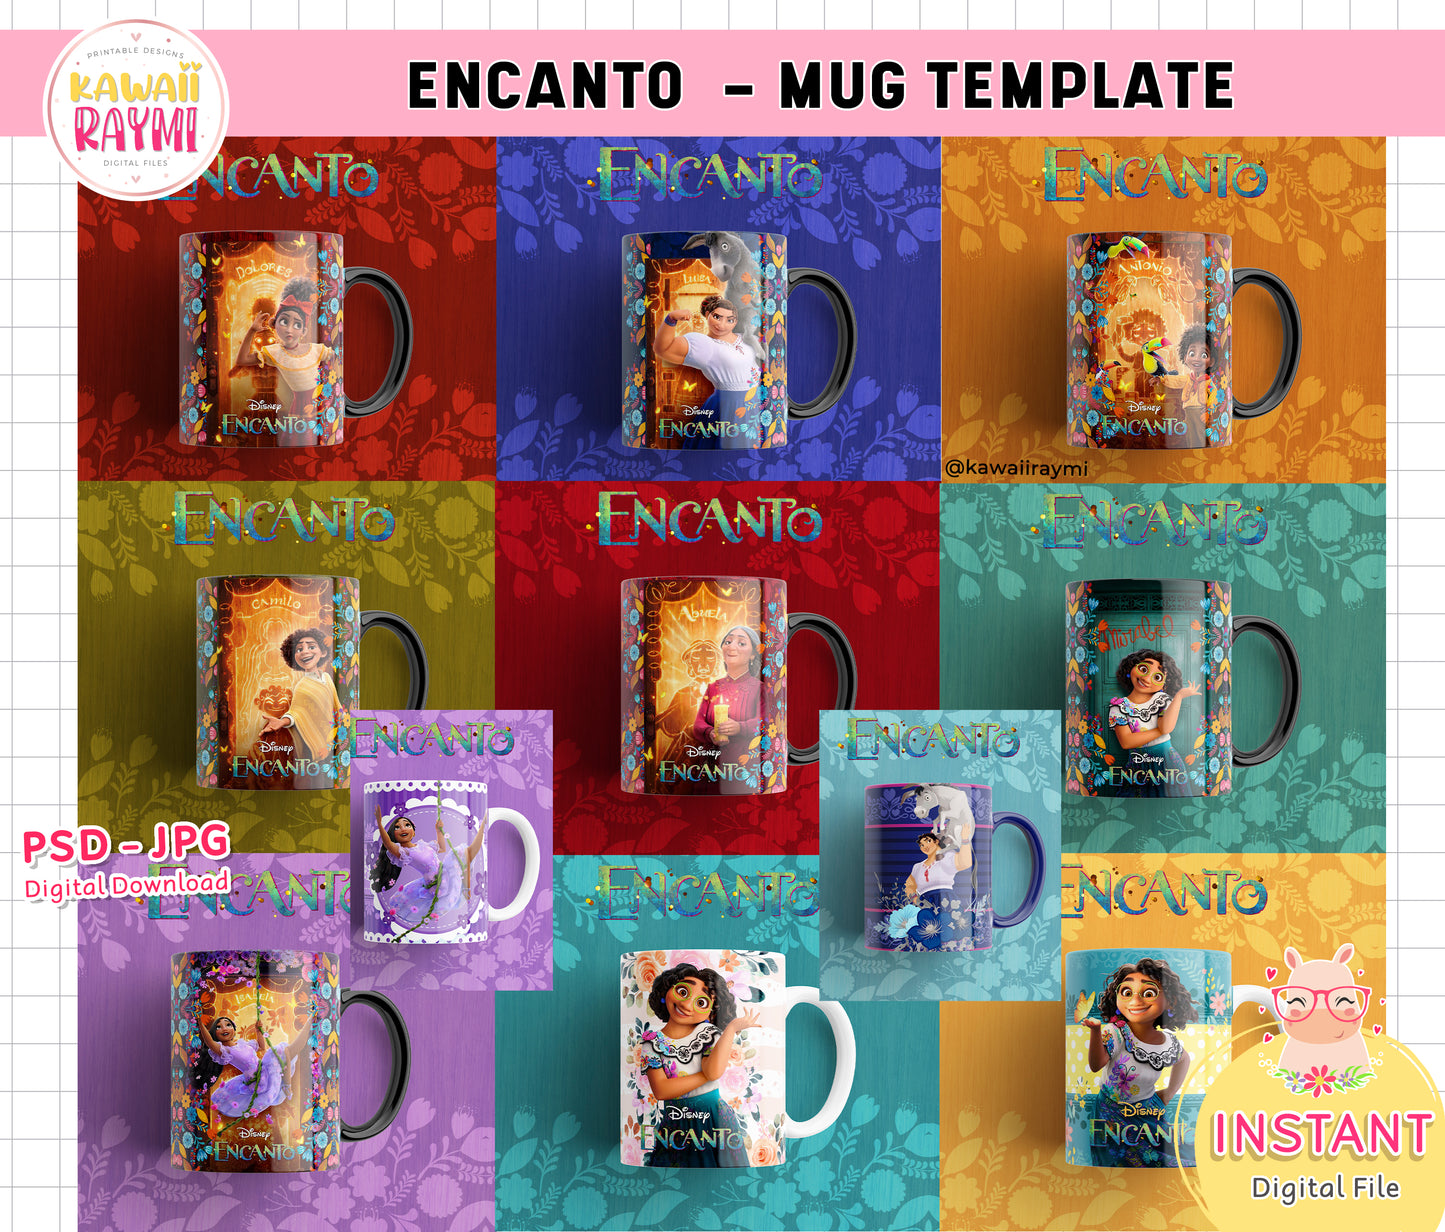 Encanto mug template, psd, jpg encanto templates sublimation, mockups